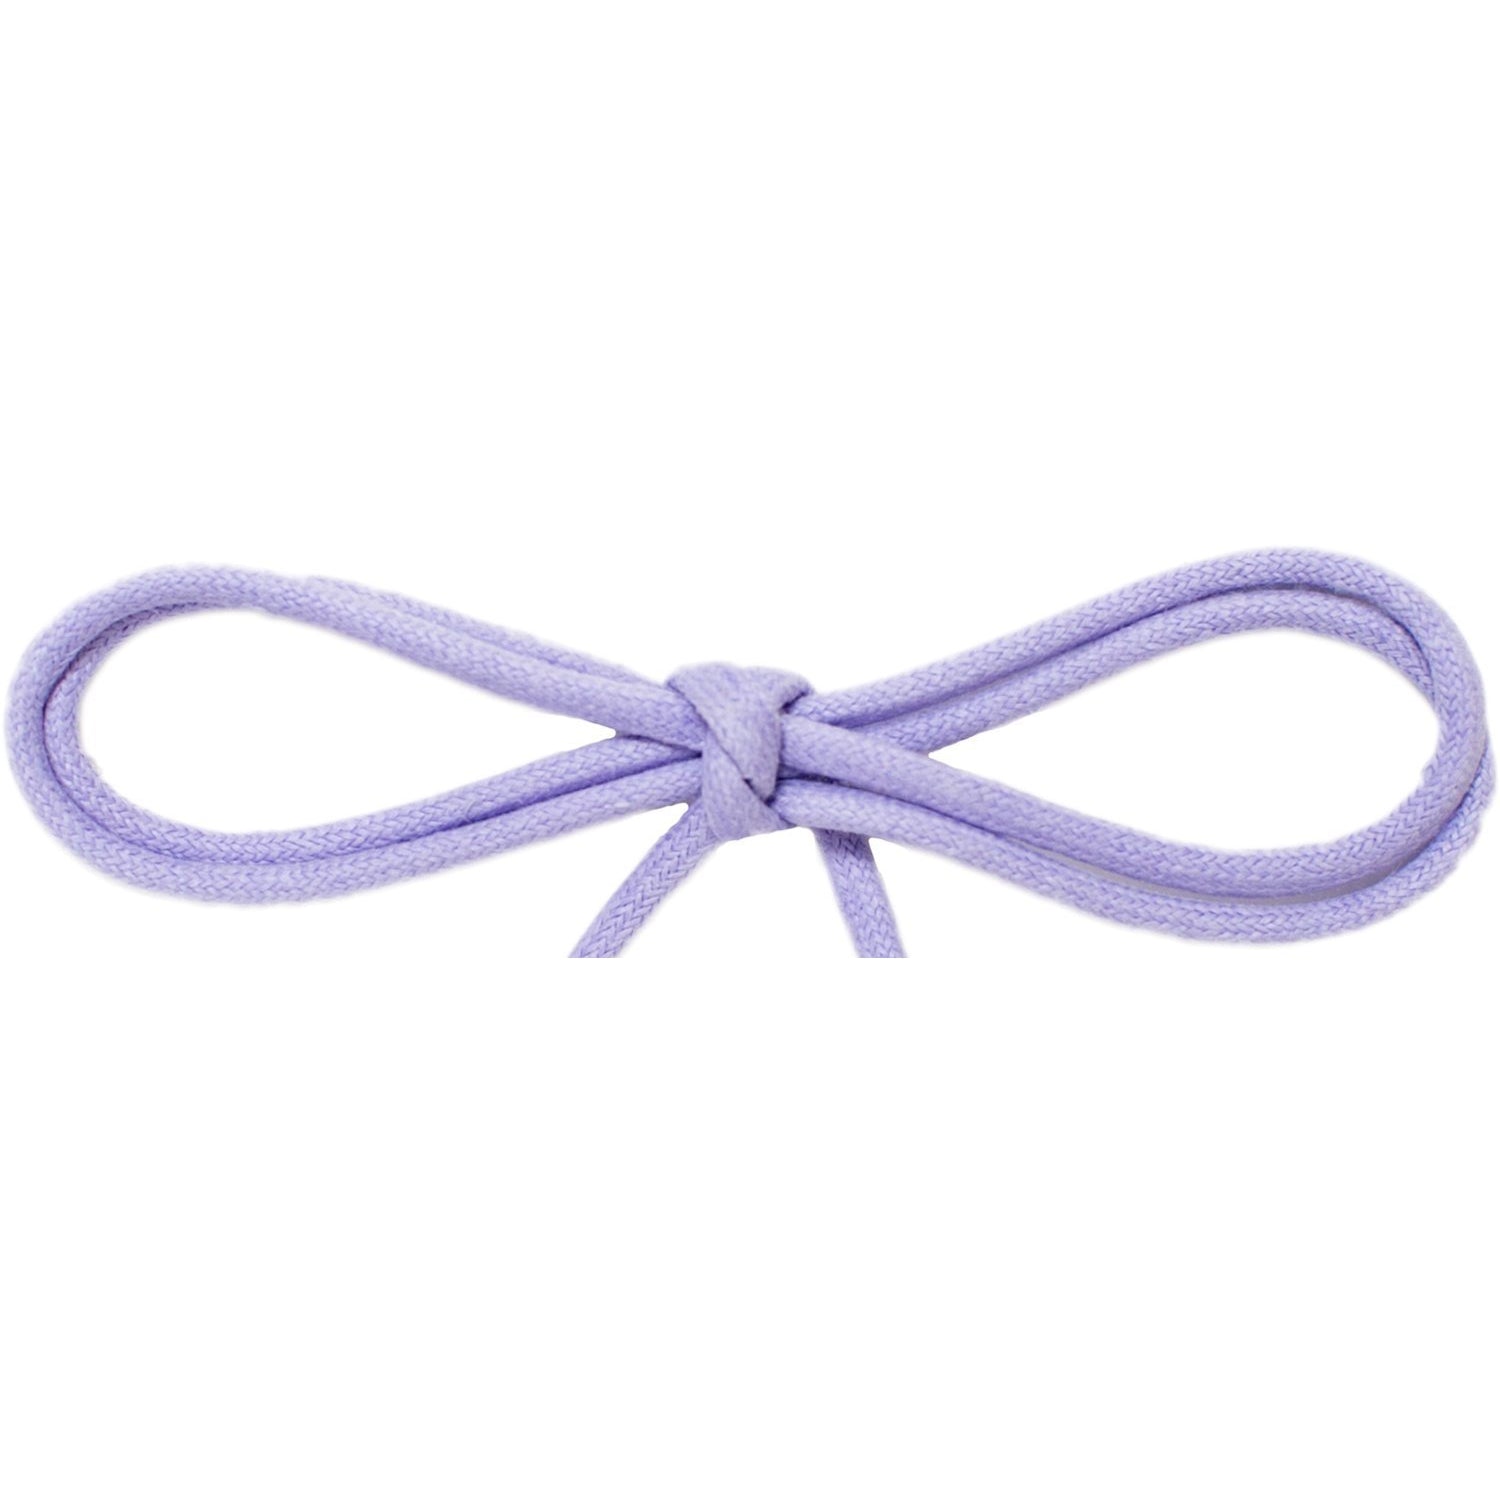 Wholesale Waxed Cotton Thin Round DRESS Laces 1/8'' - Violet (12 Pair Pack) Shoelaces